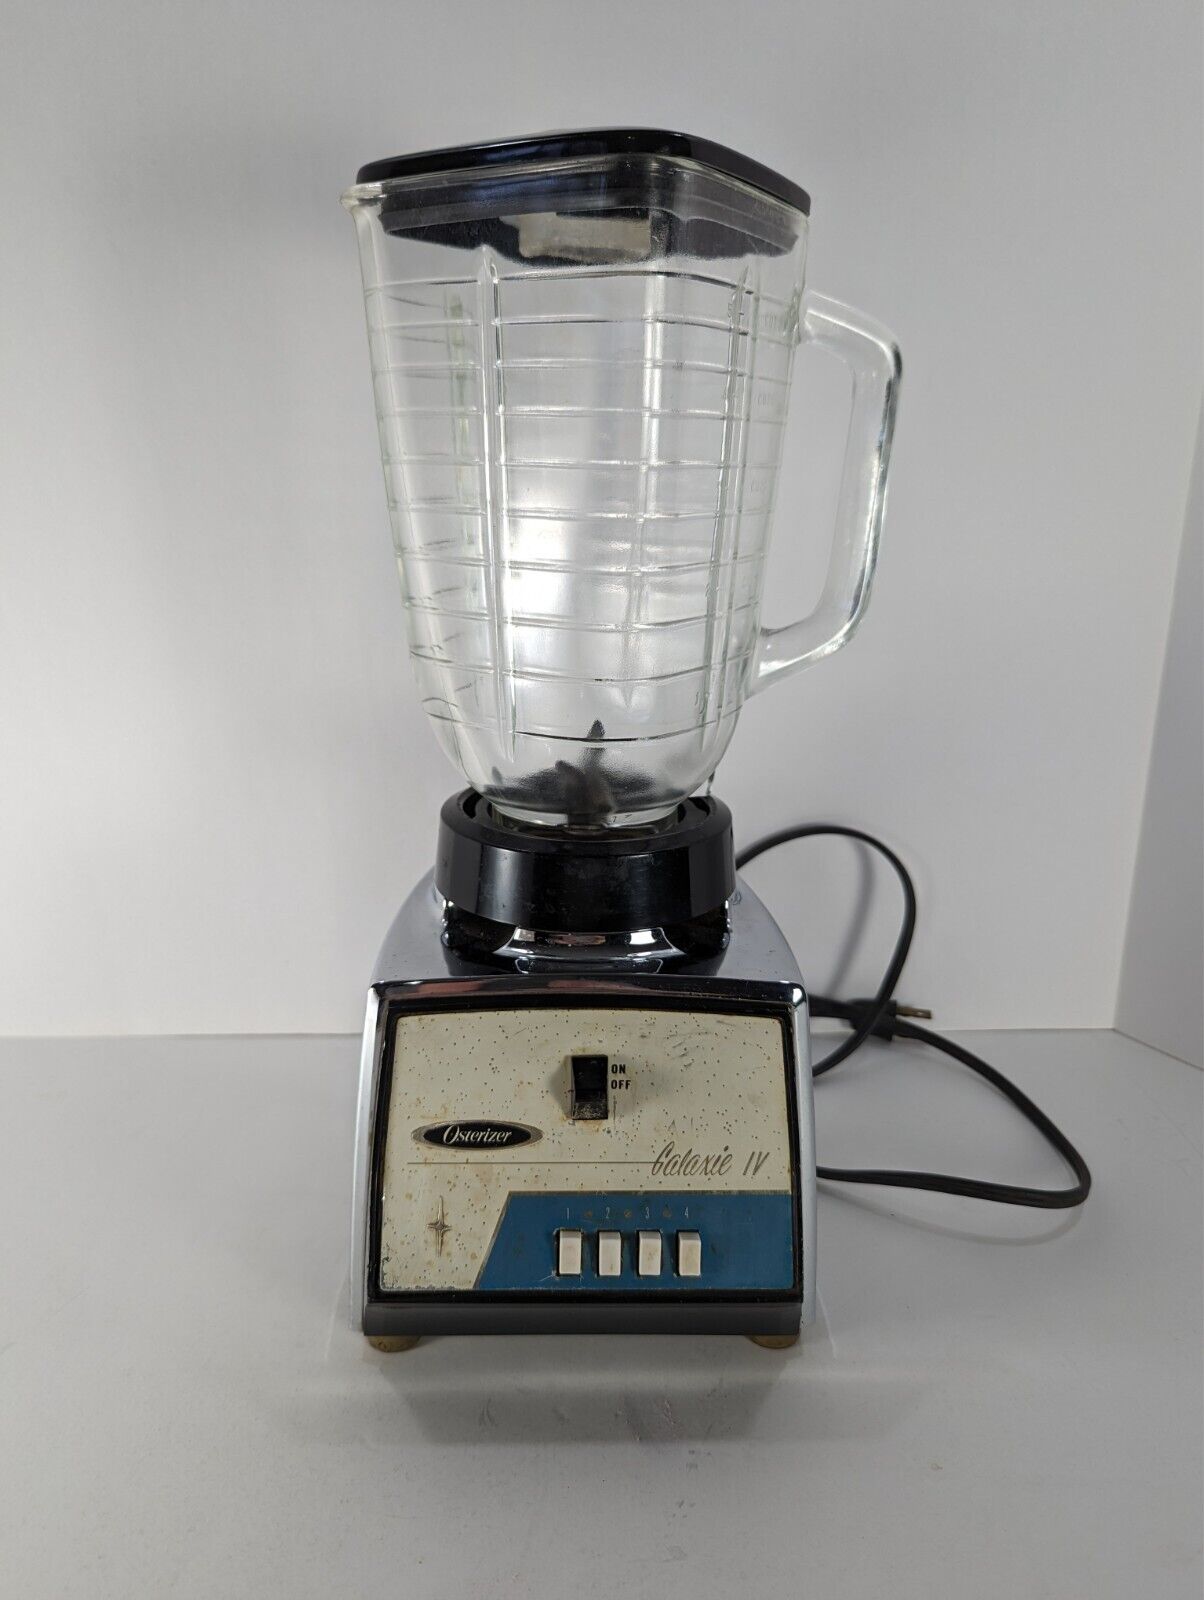 Vintage Osterizer Galaxie IV 4 Speed Blender Tested Model 477 Series 9